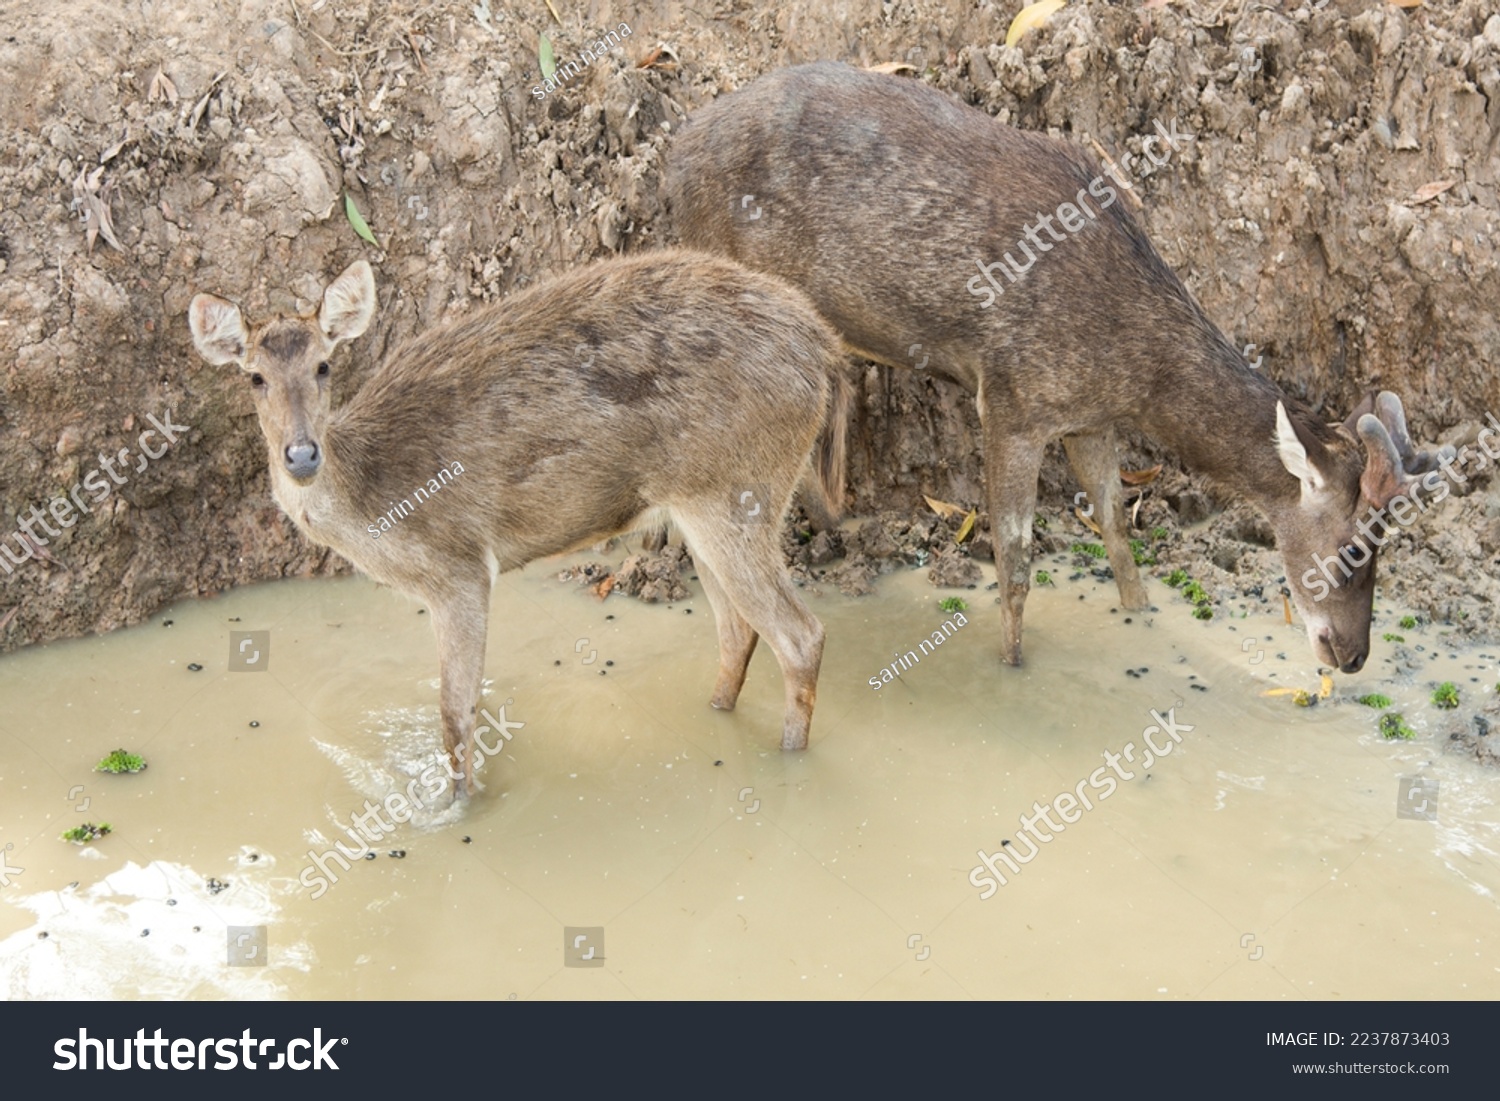 Rusa Deer,Javan Deer(Rusa timorensis)Cervus celebensis. Herbivores, especially leaves. that are almost on the verge of extinction. Therefore, it is popularly raised to cut antlers, make medicine. #2237873403